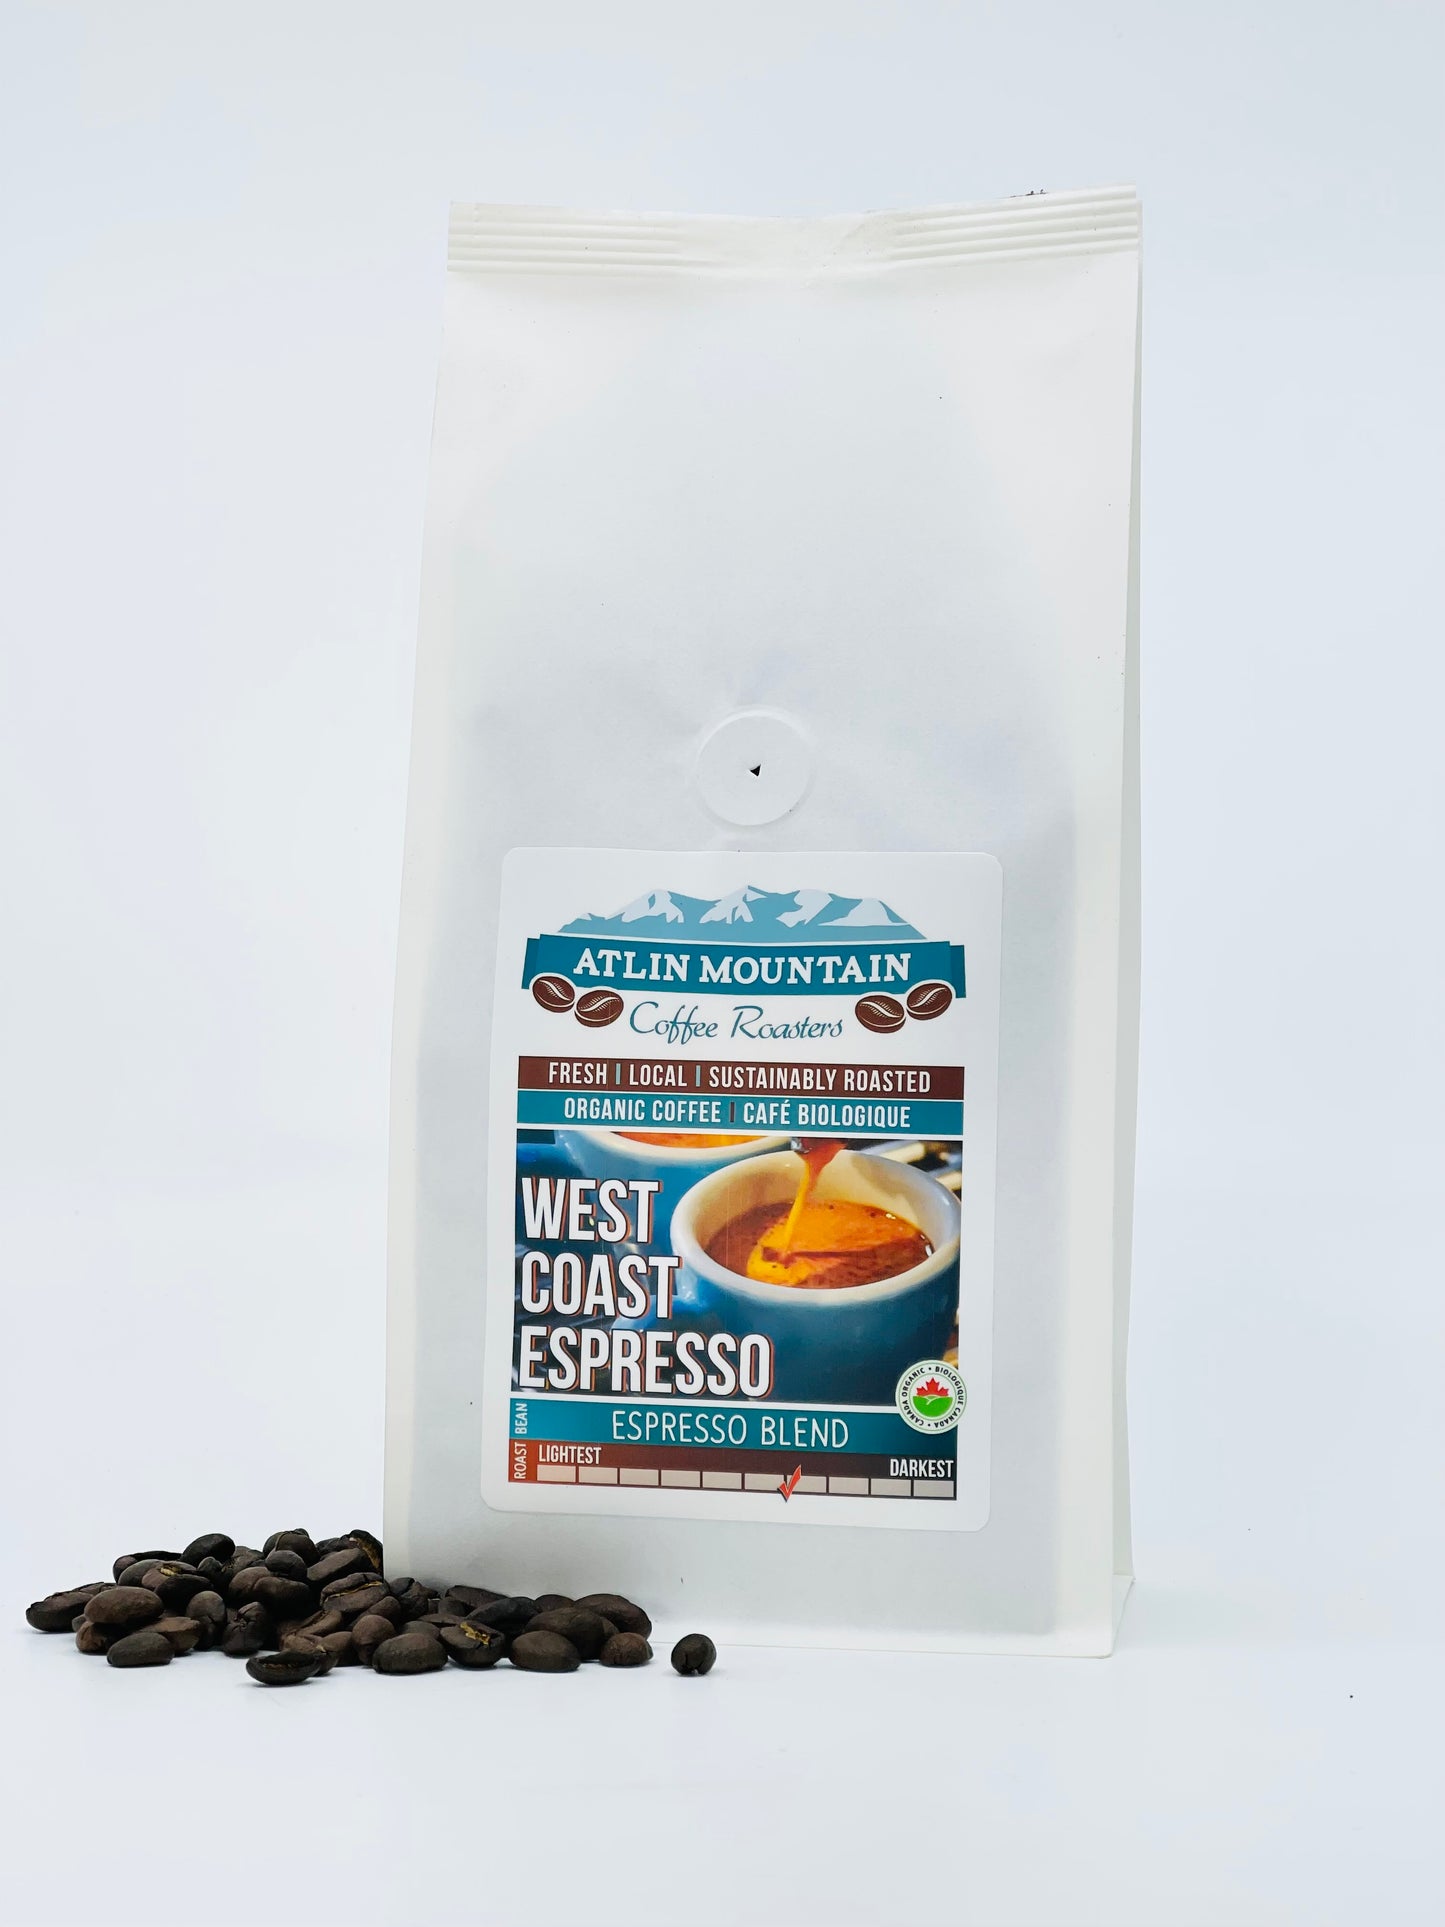 West Coast Espresso - Organic Espresso blend - Multi-origin - Bold, silky bodied